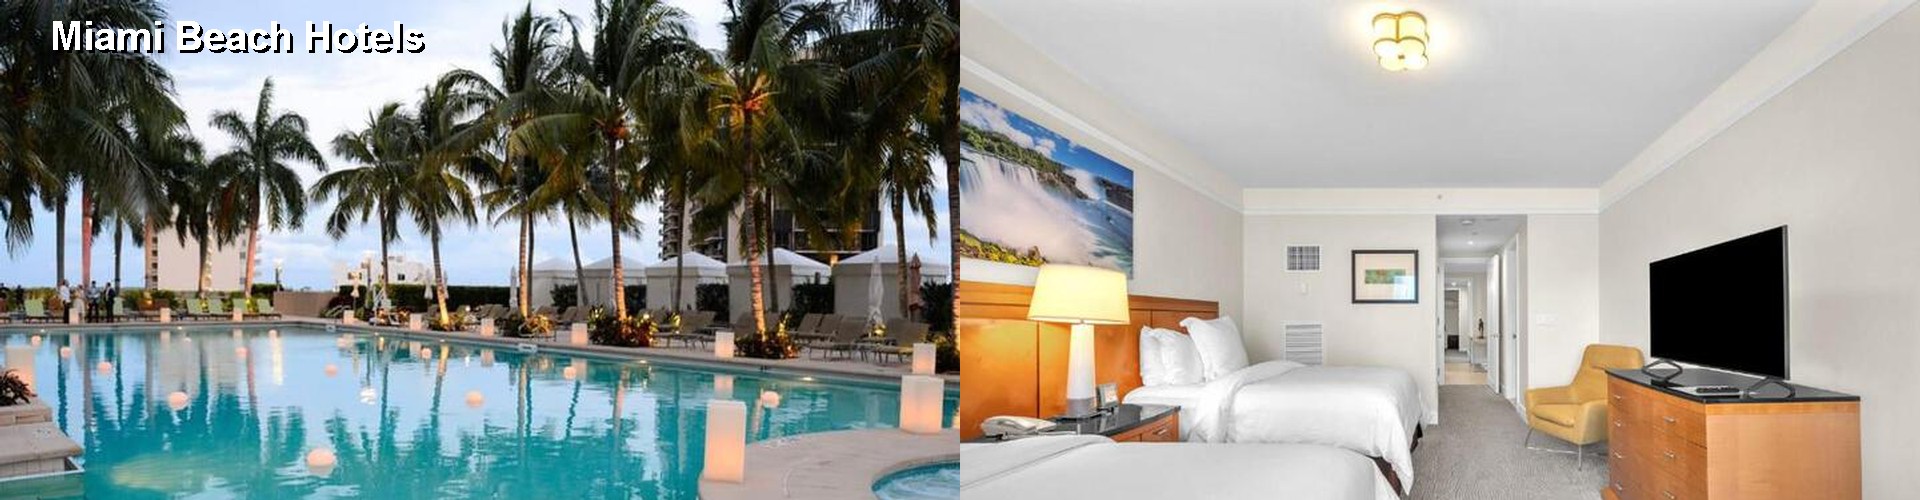 4 Best Hotels near Miami Beach